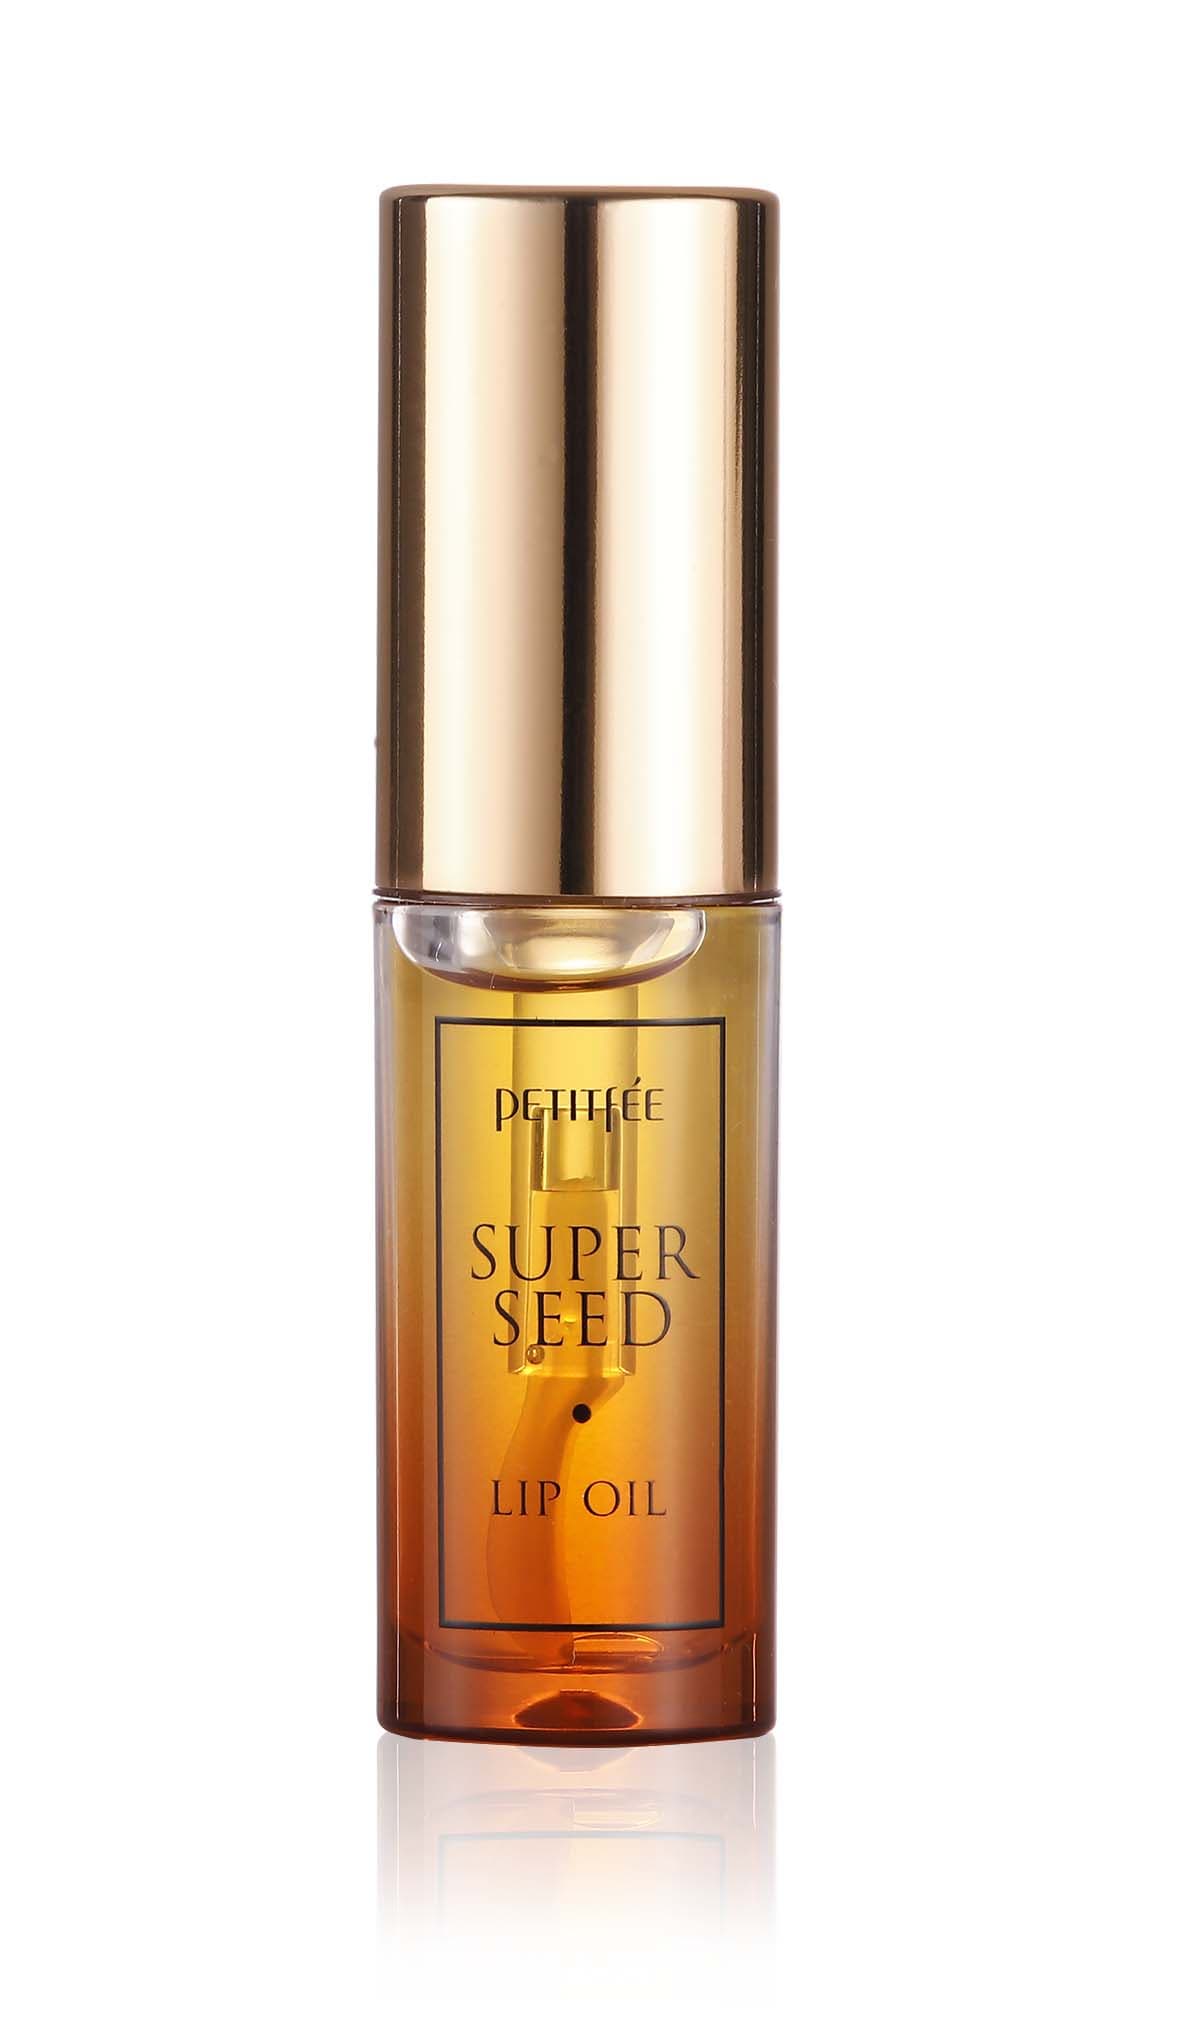 PETITFEE Super Seed Lip Oil